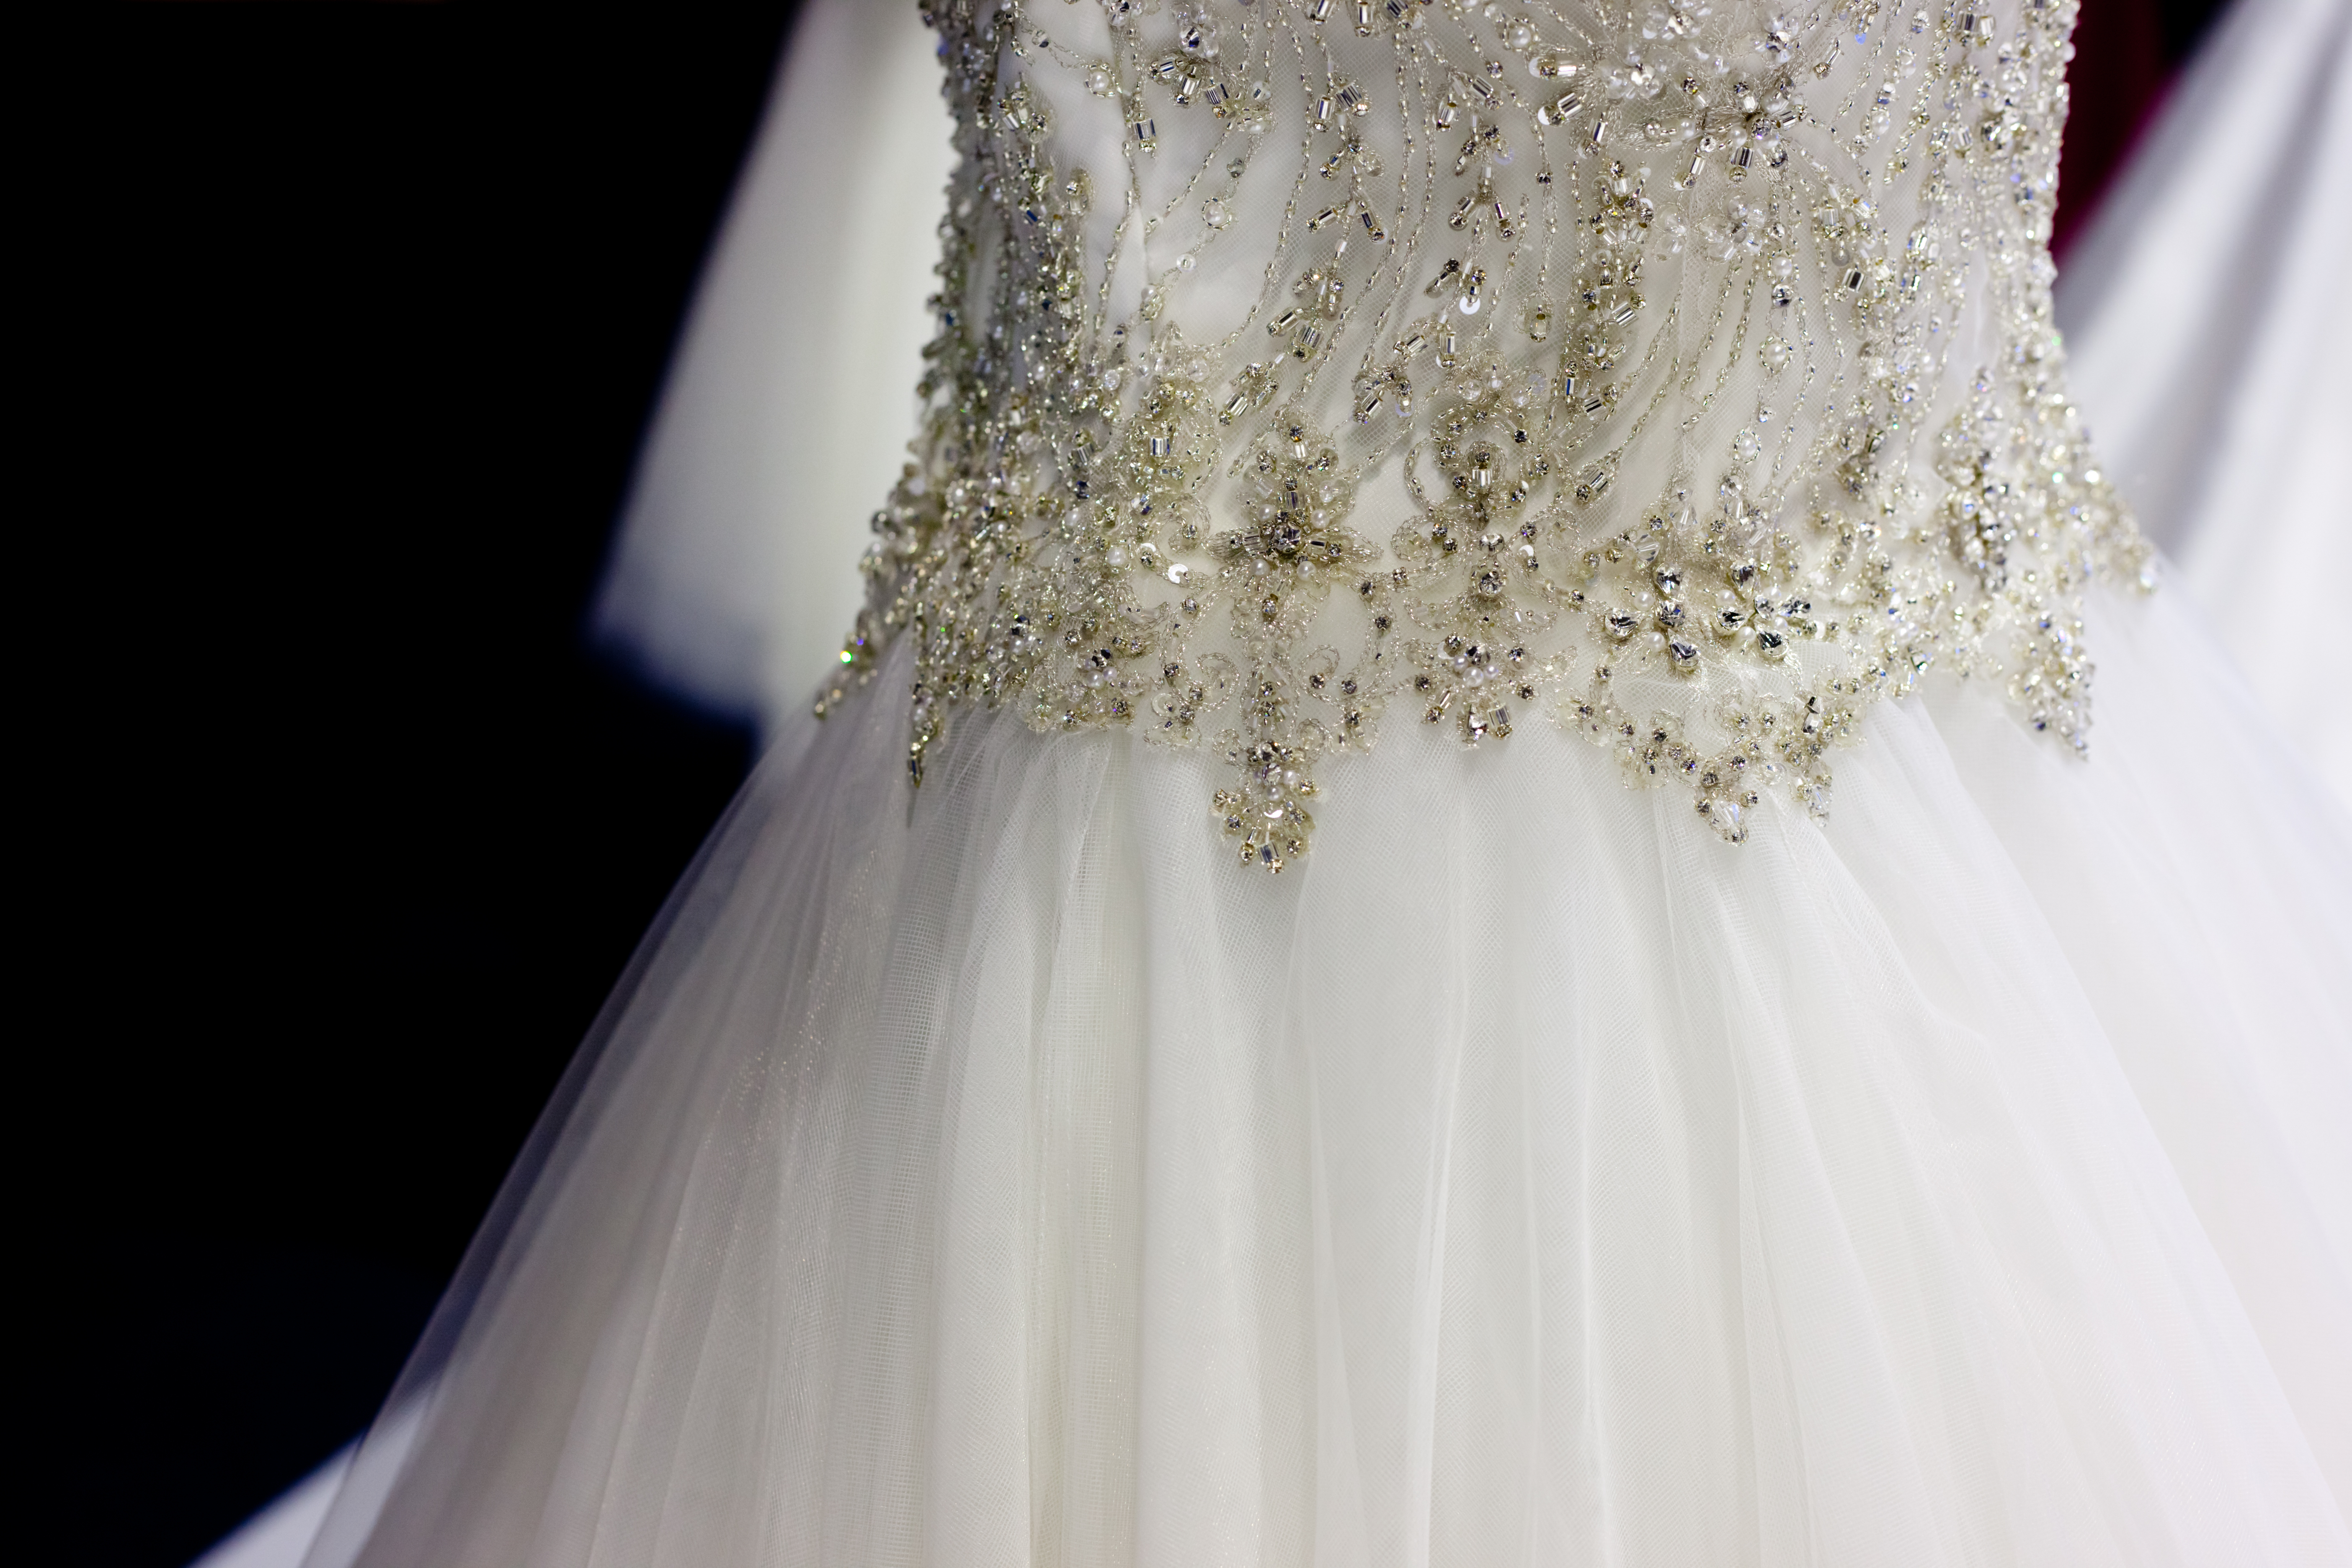 A white wedding dress | Source: Shutterstock